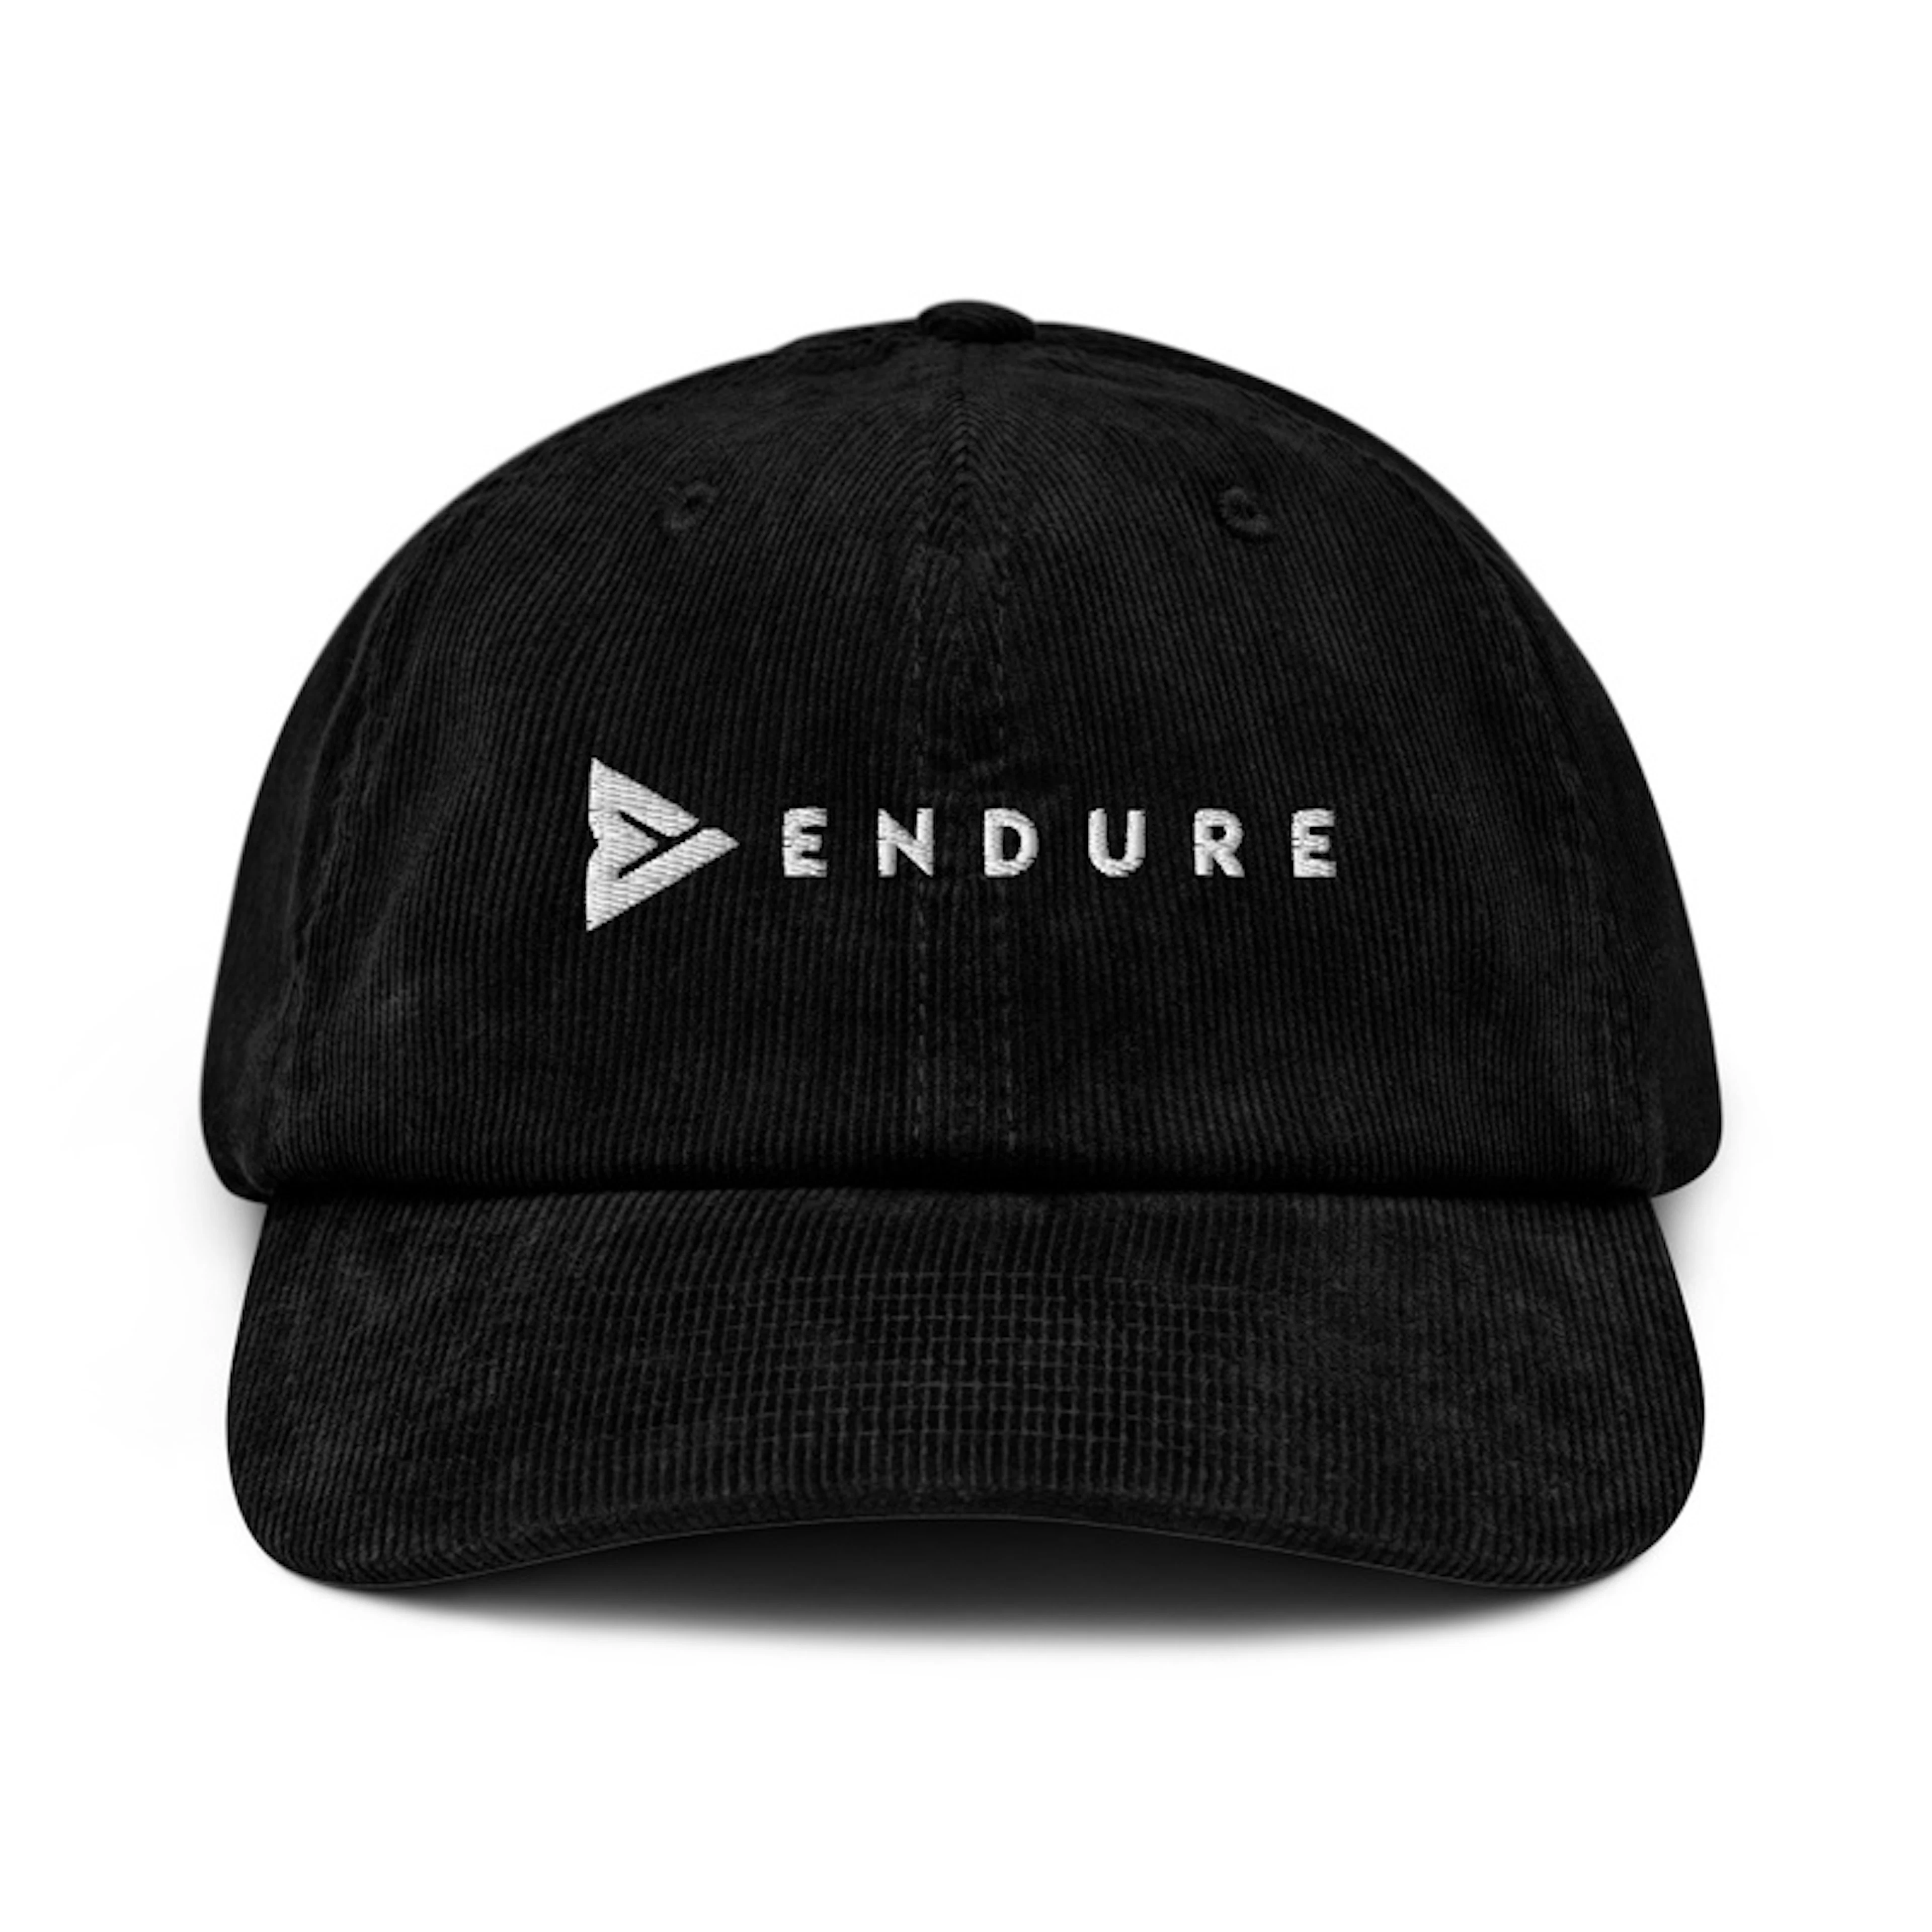 Essential Endure Embroidered Hat